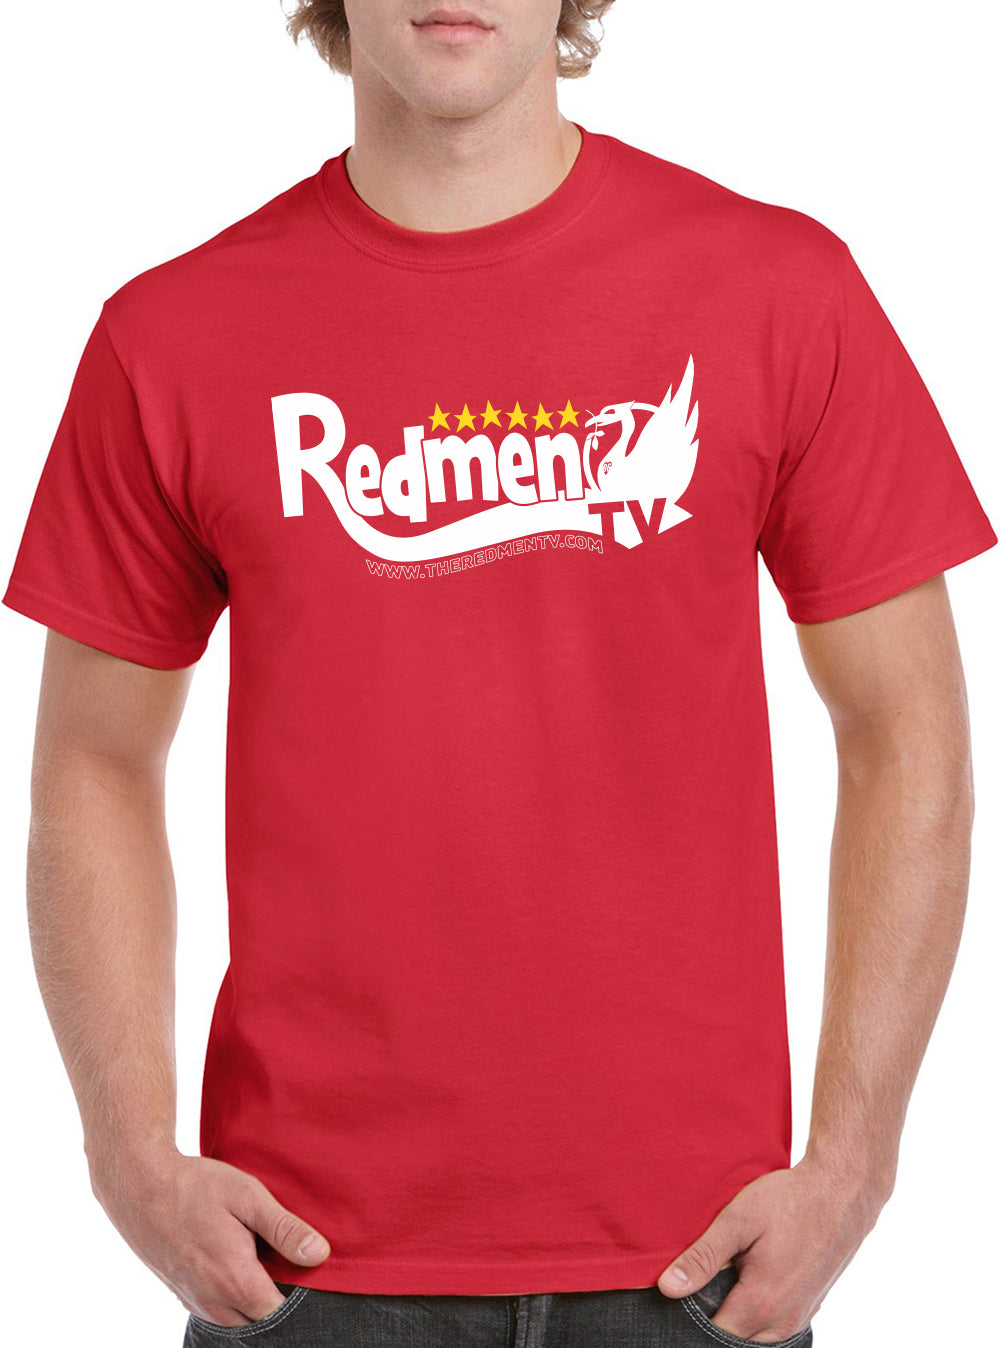 12 REDMEN ORIGINALS 'Logo' Edition Tee - The Redmen TV